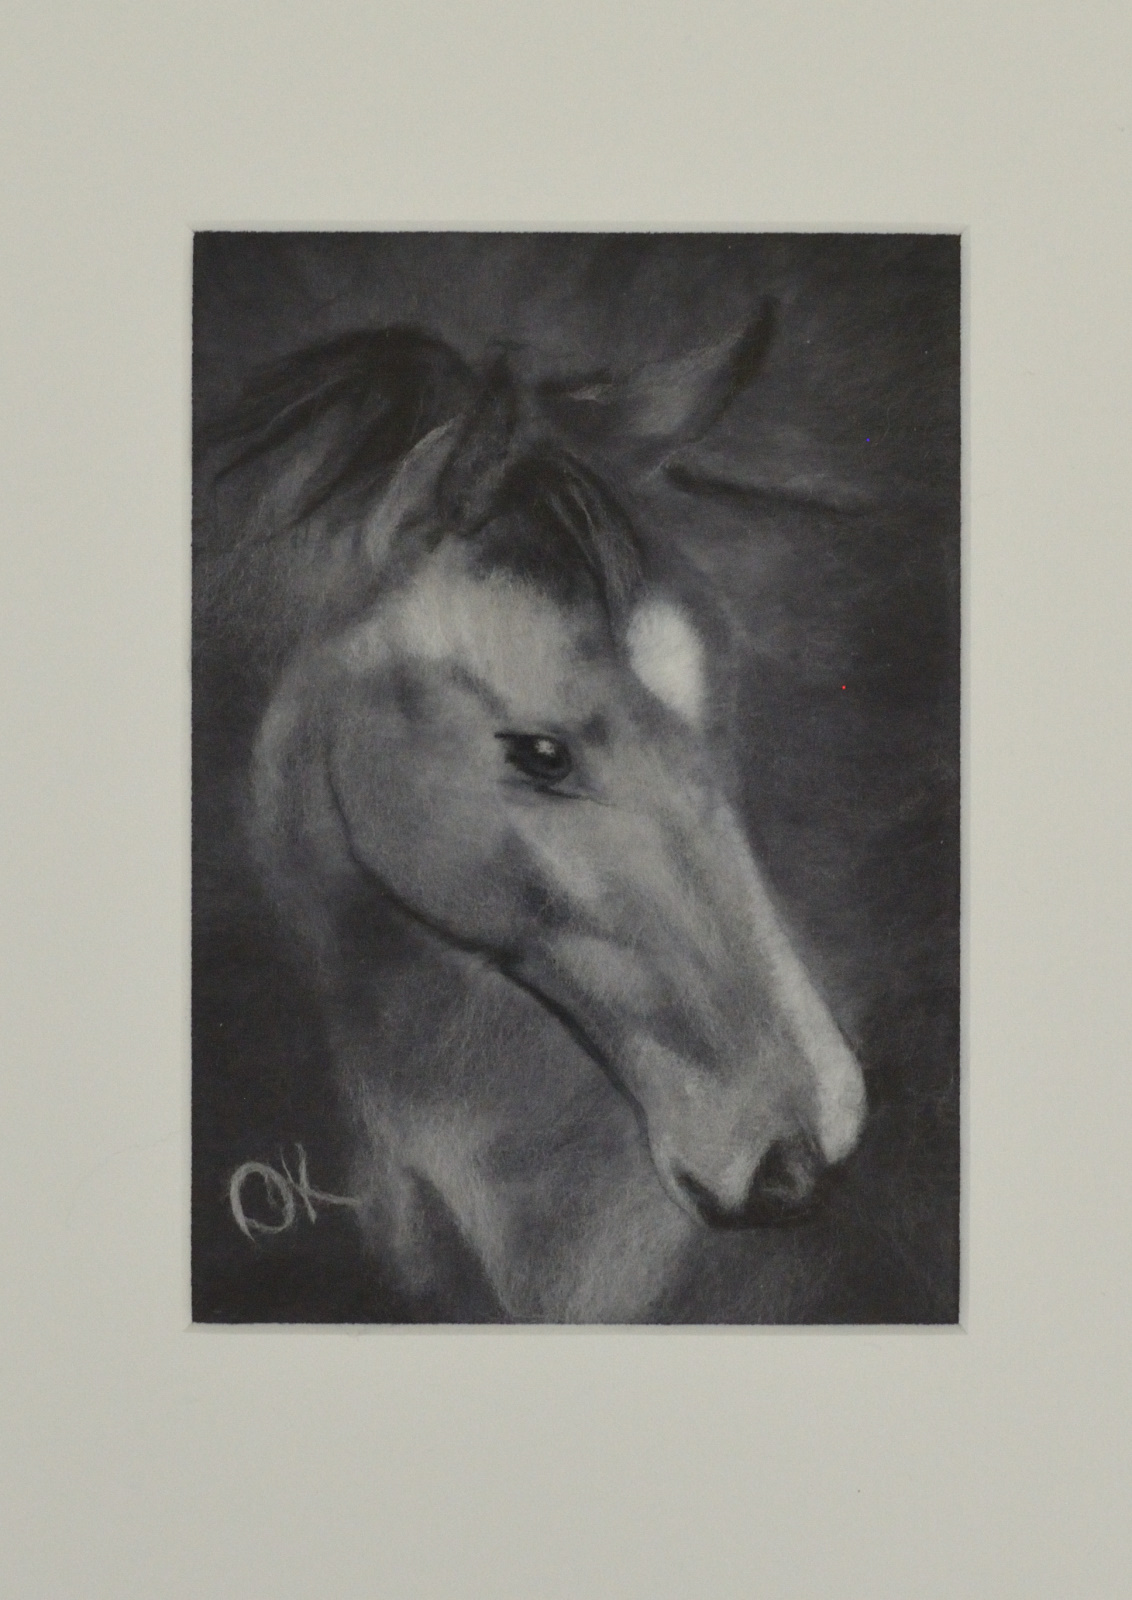 Horse. Wool Art Galleryi. Picture made of fine merino wool